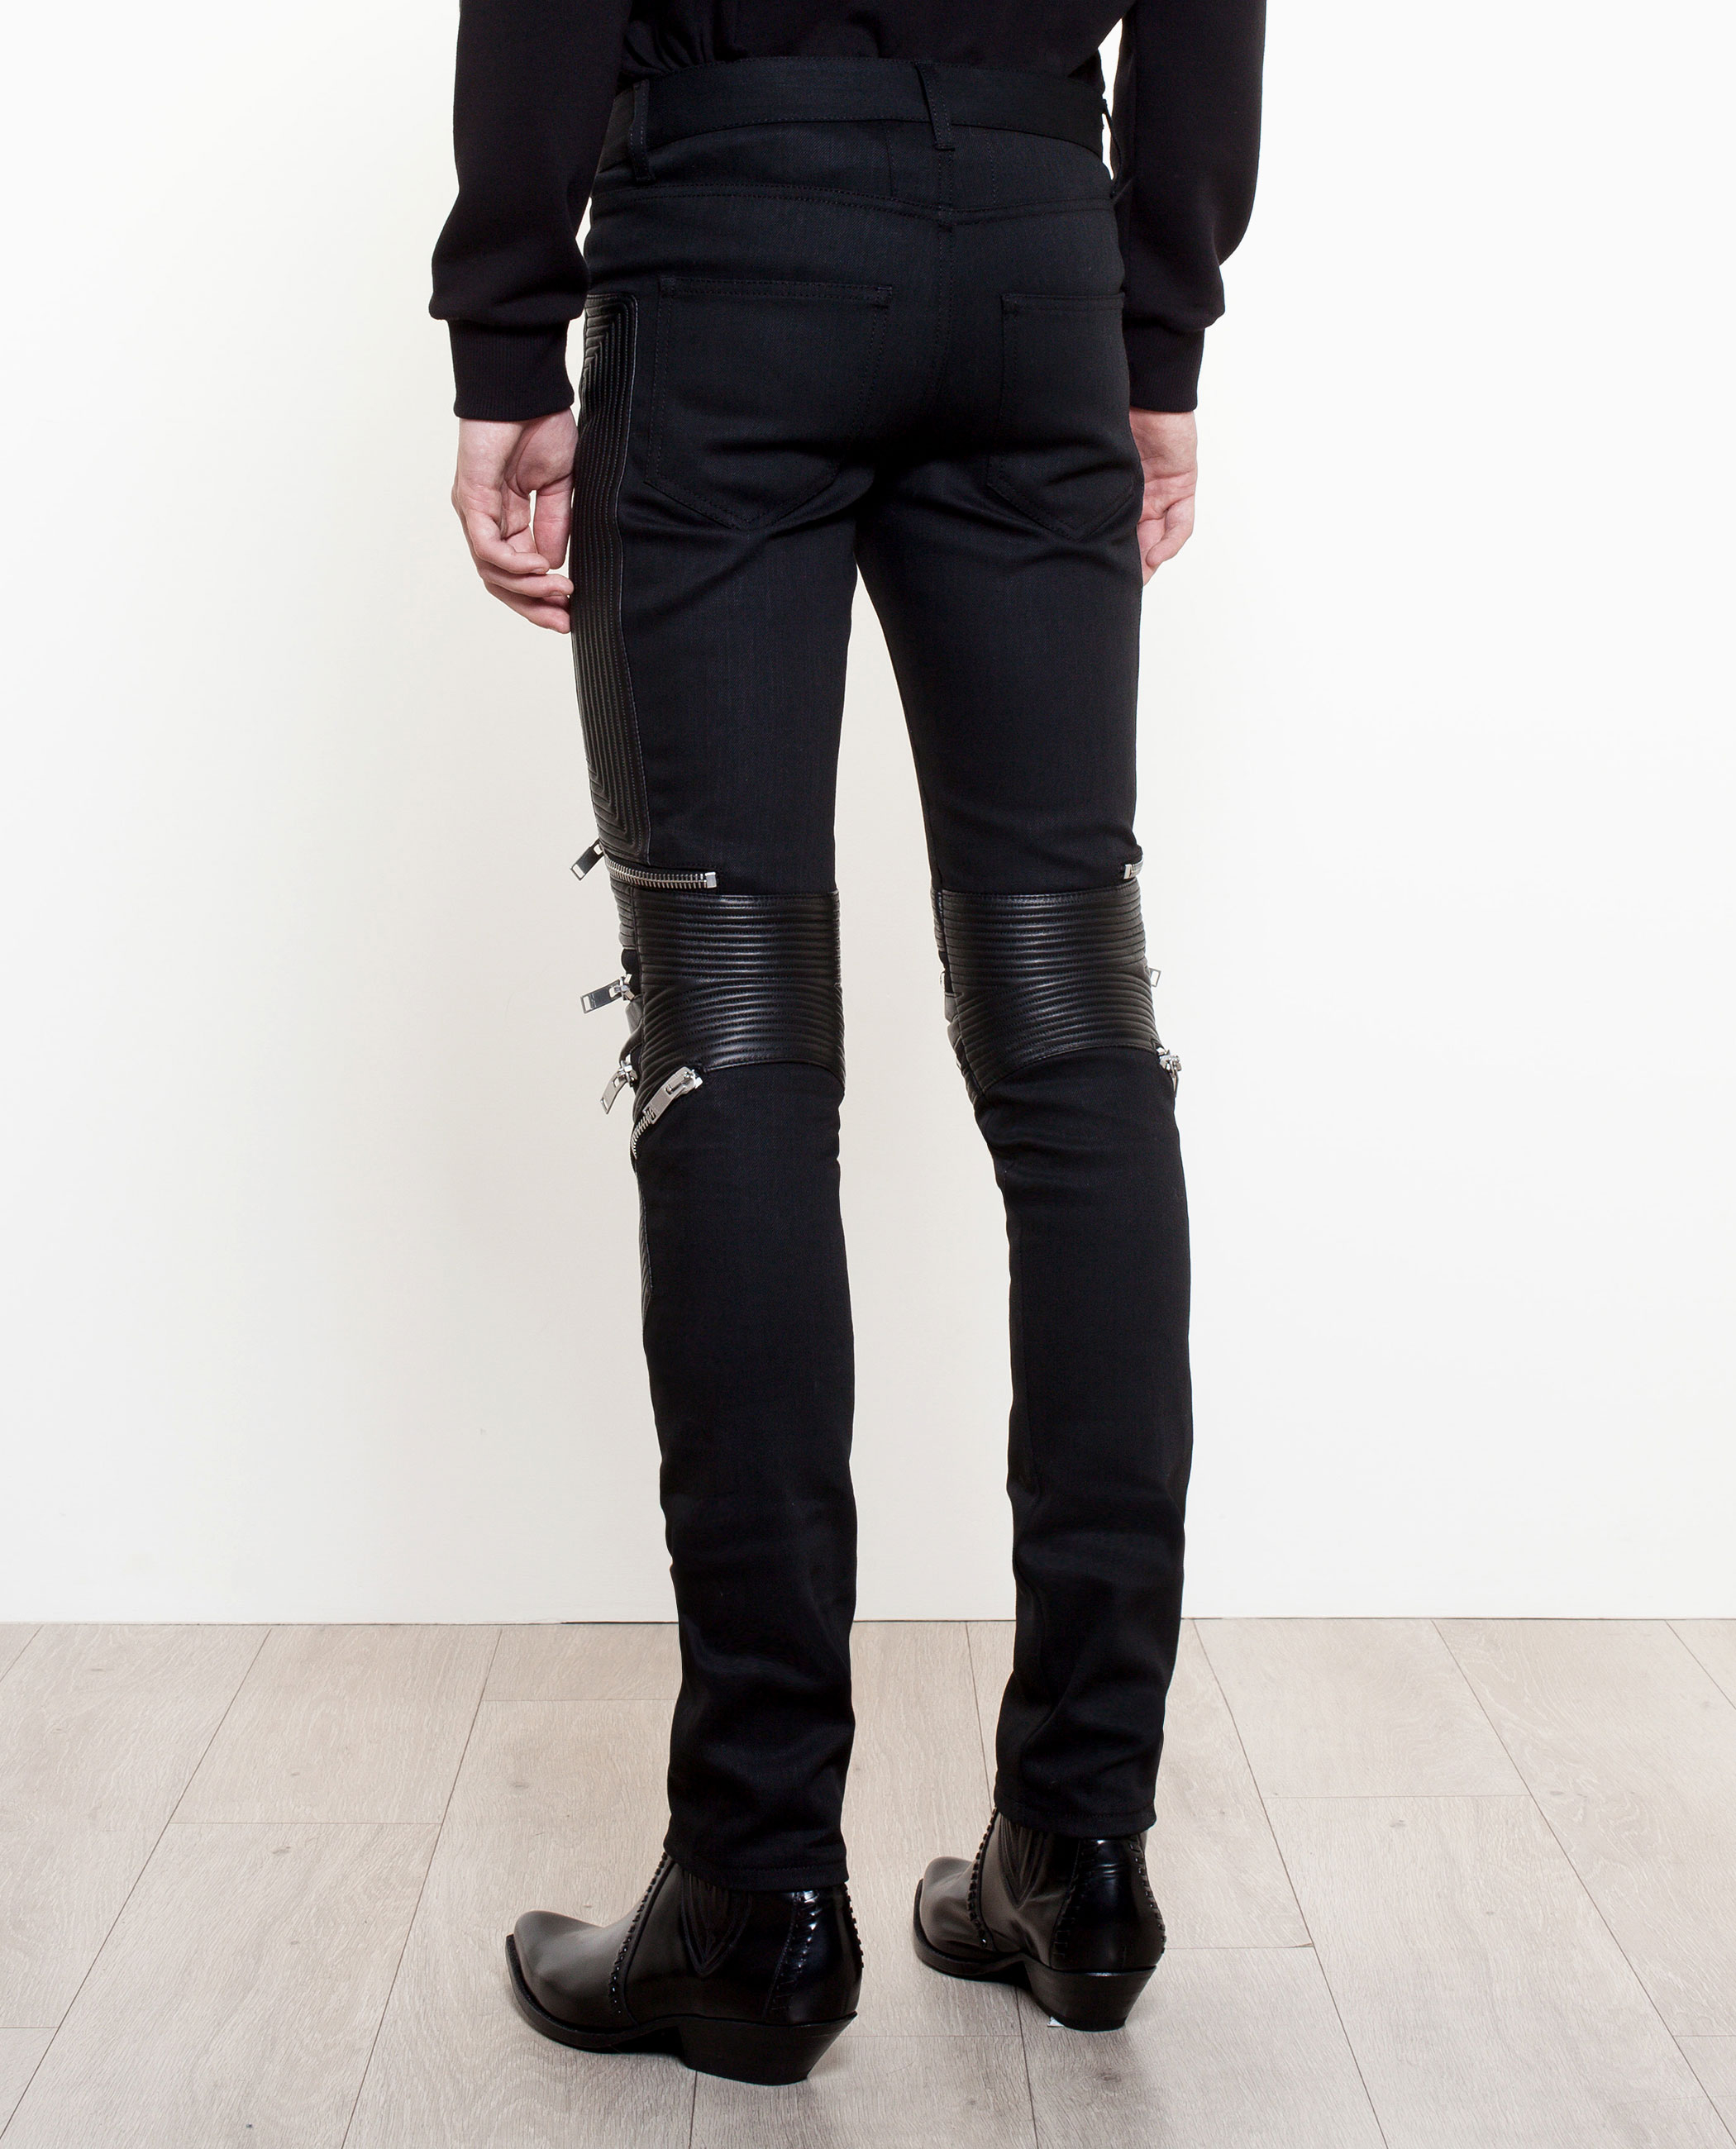 Saint Laurent Denim Zip Detail Jeans in Black for Men - Lyst